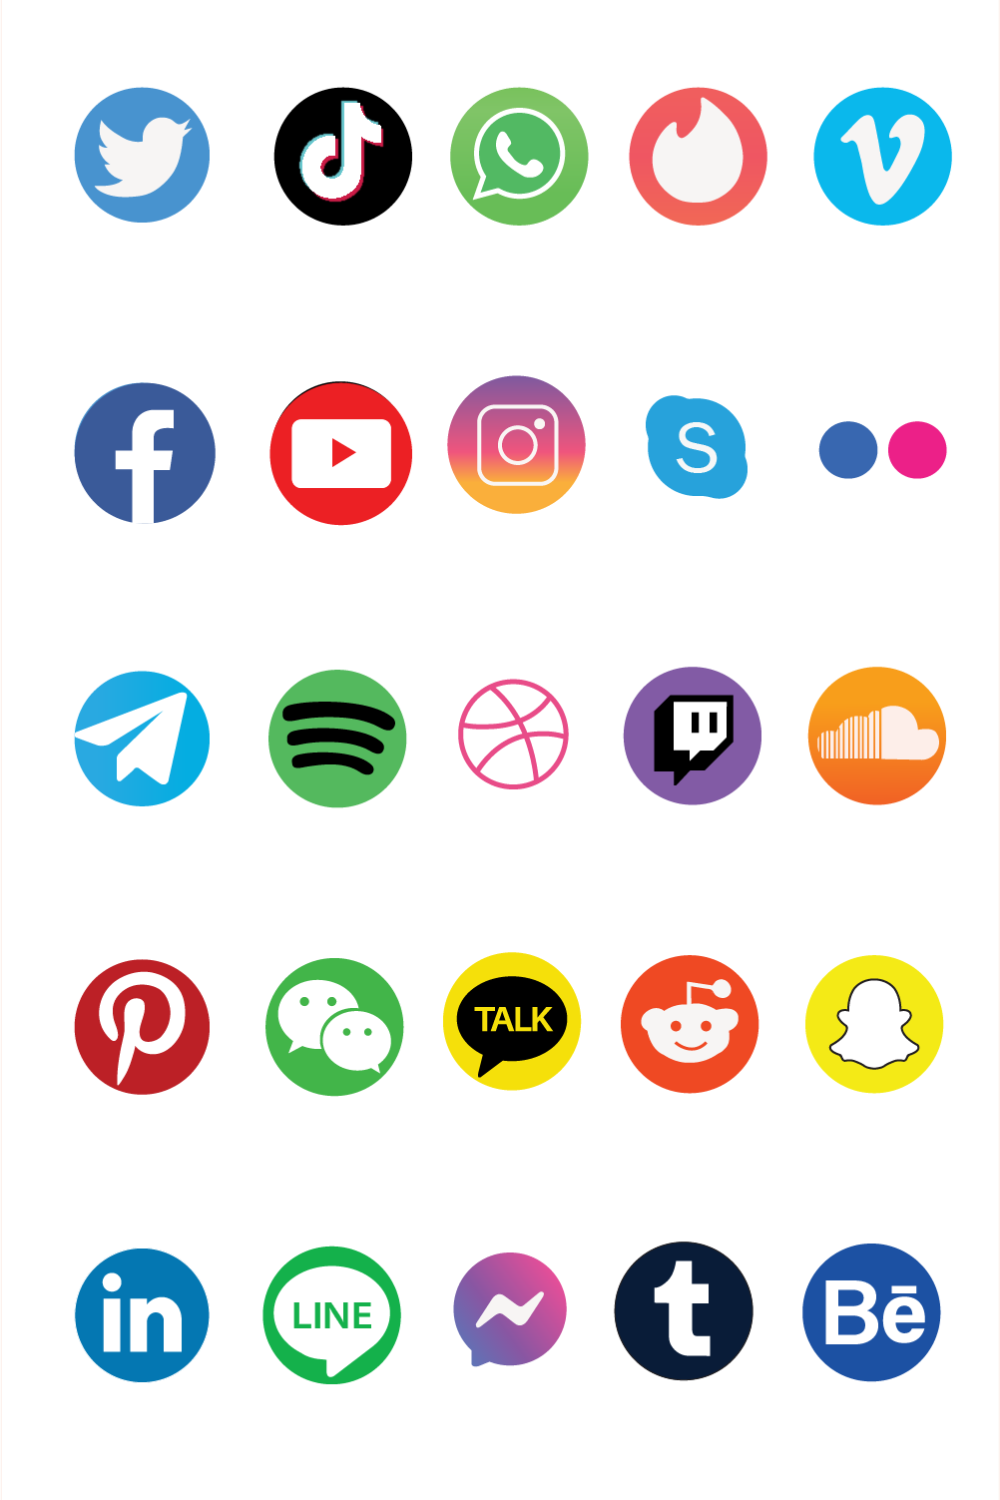 Set of 25 Social Media Icons pinterest image.